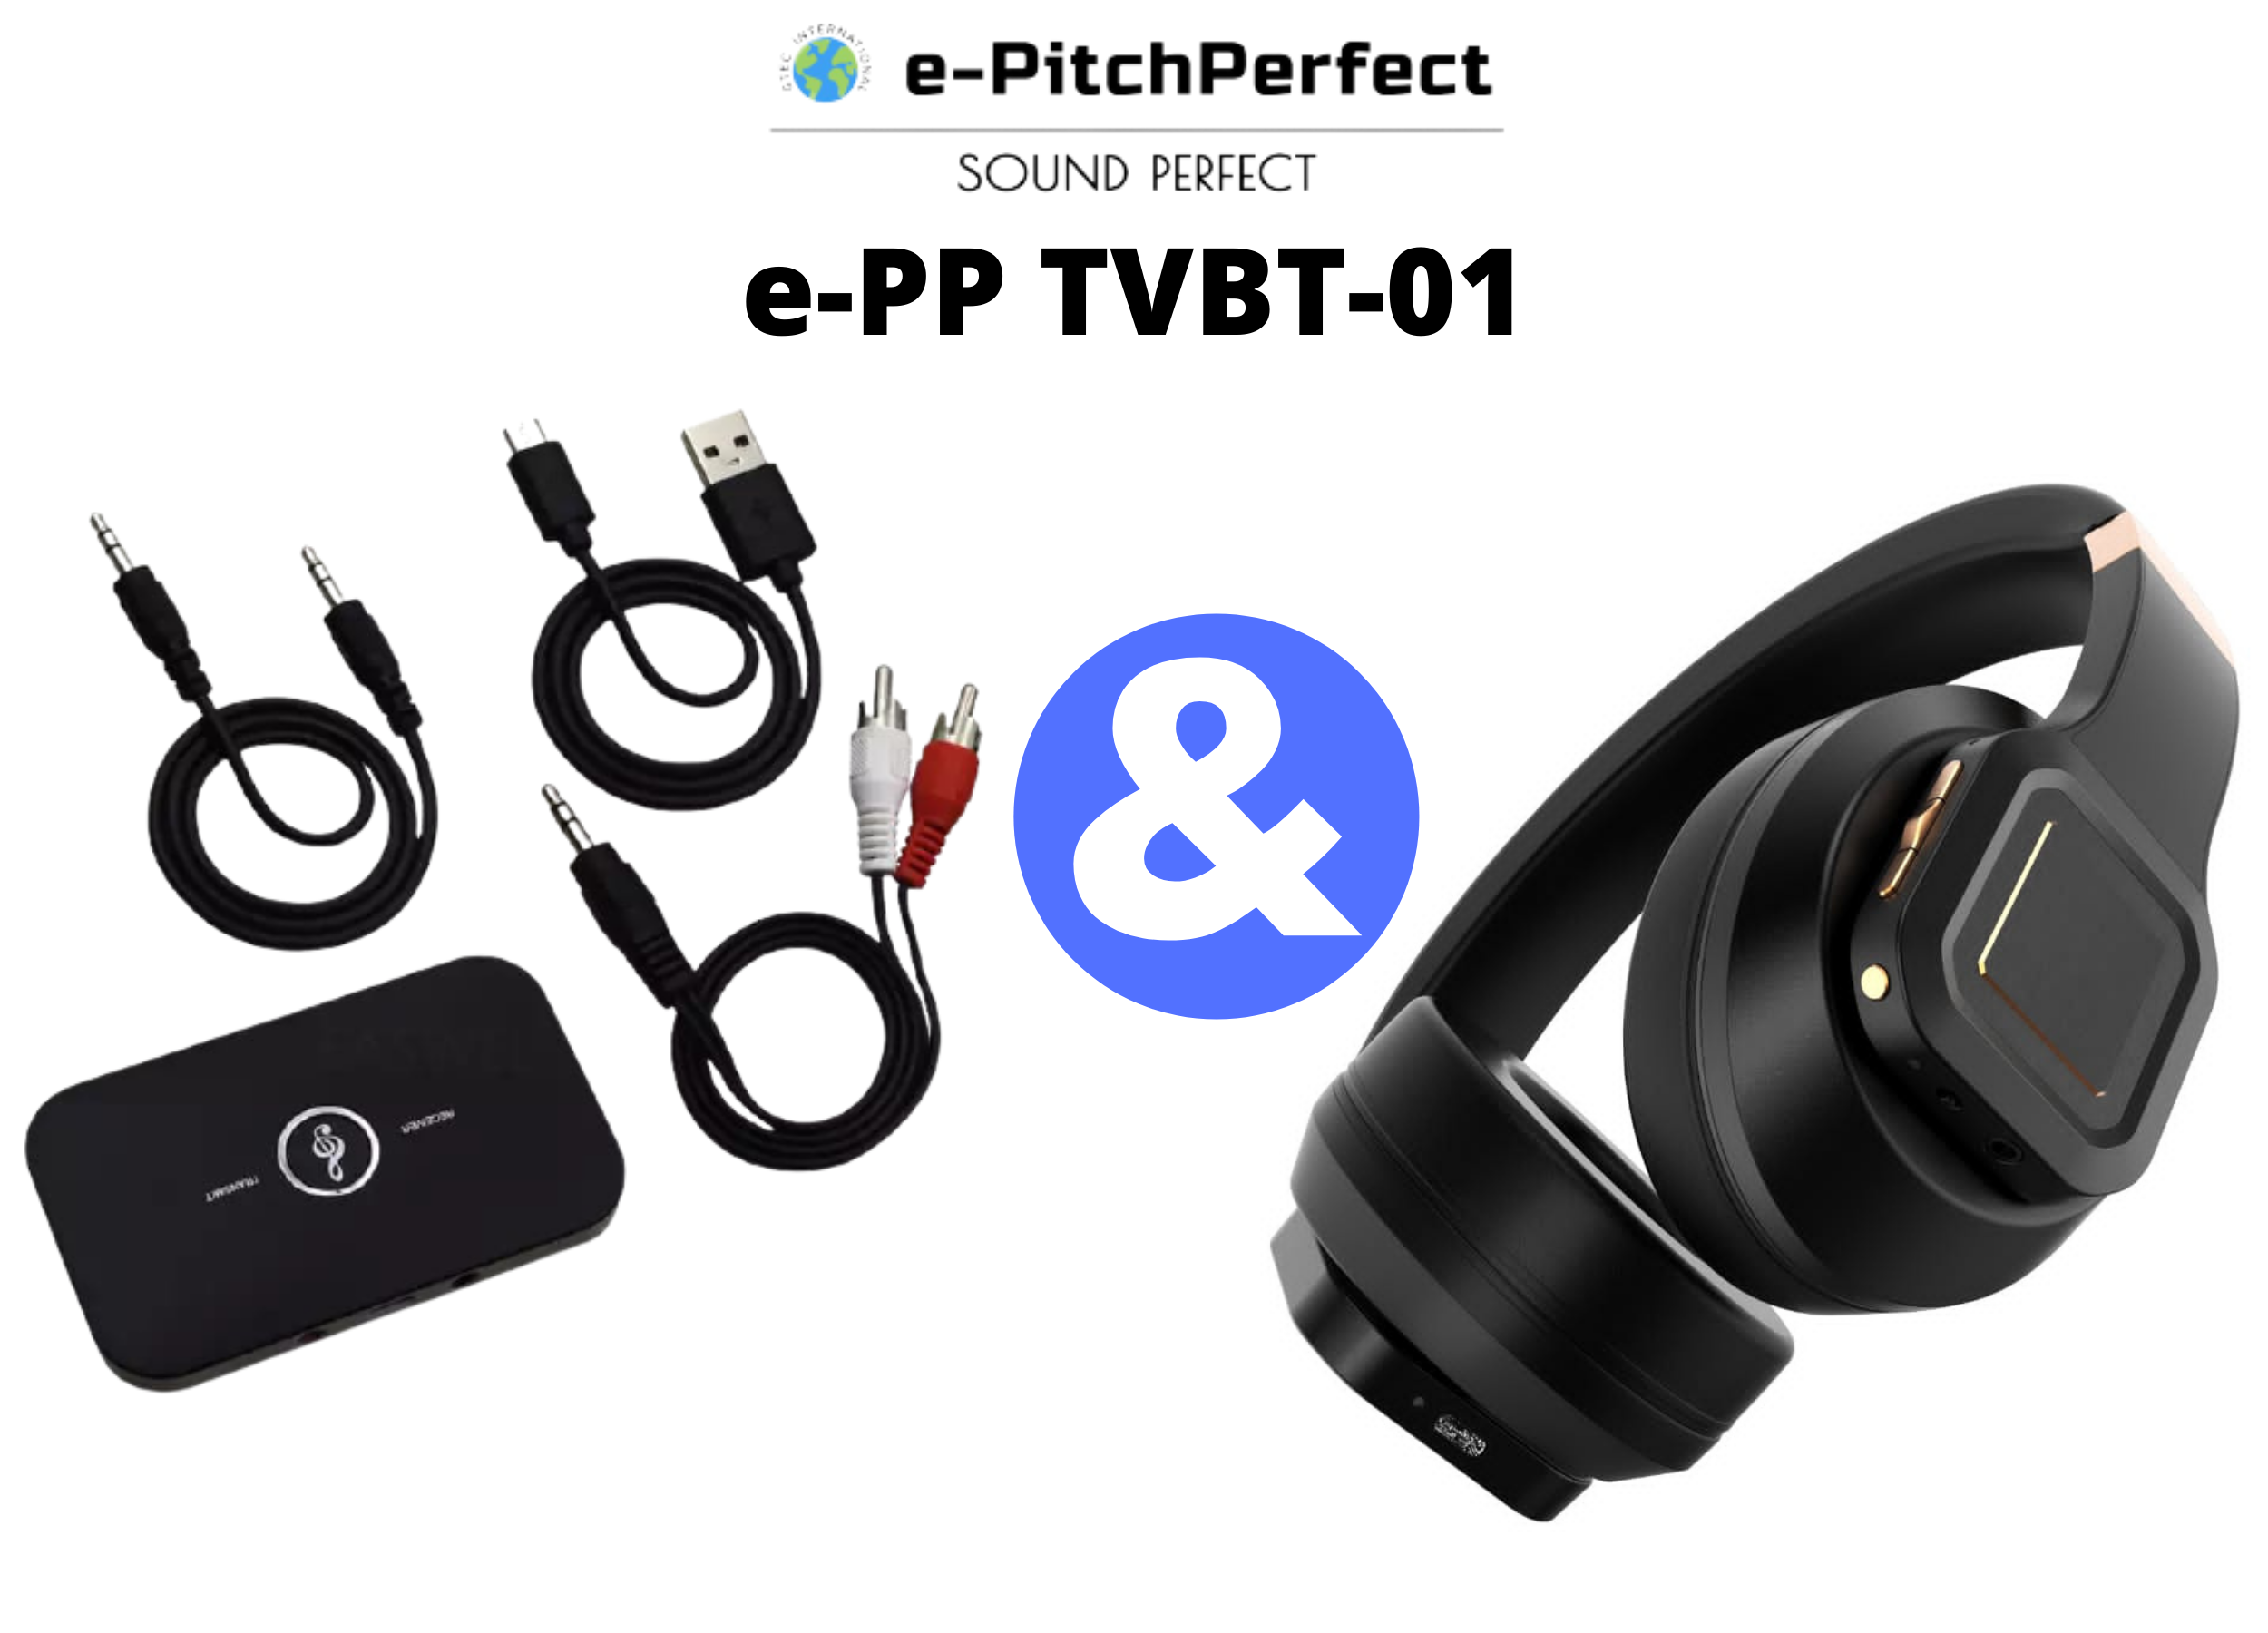 e-PP-TVBT-001 Personal TV listening system consists of Wireless ANC Bluetooth Headphone e-PP- ANC-BT & BT Tx/Rx Bluetooth Audio Transmitter / Receiver Sold 7,000+ worldwide